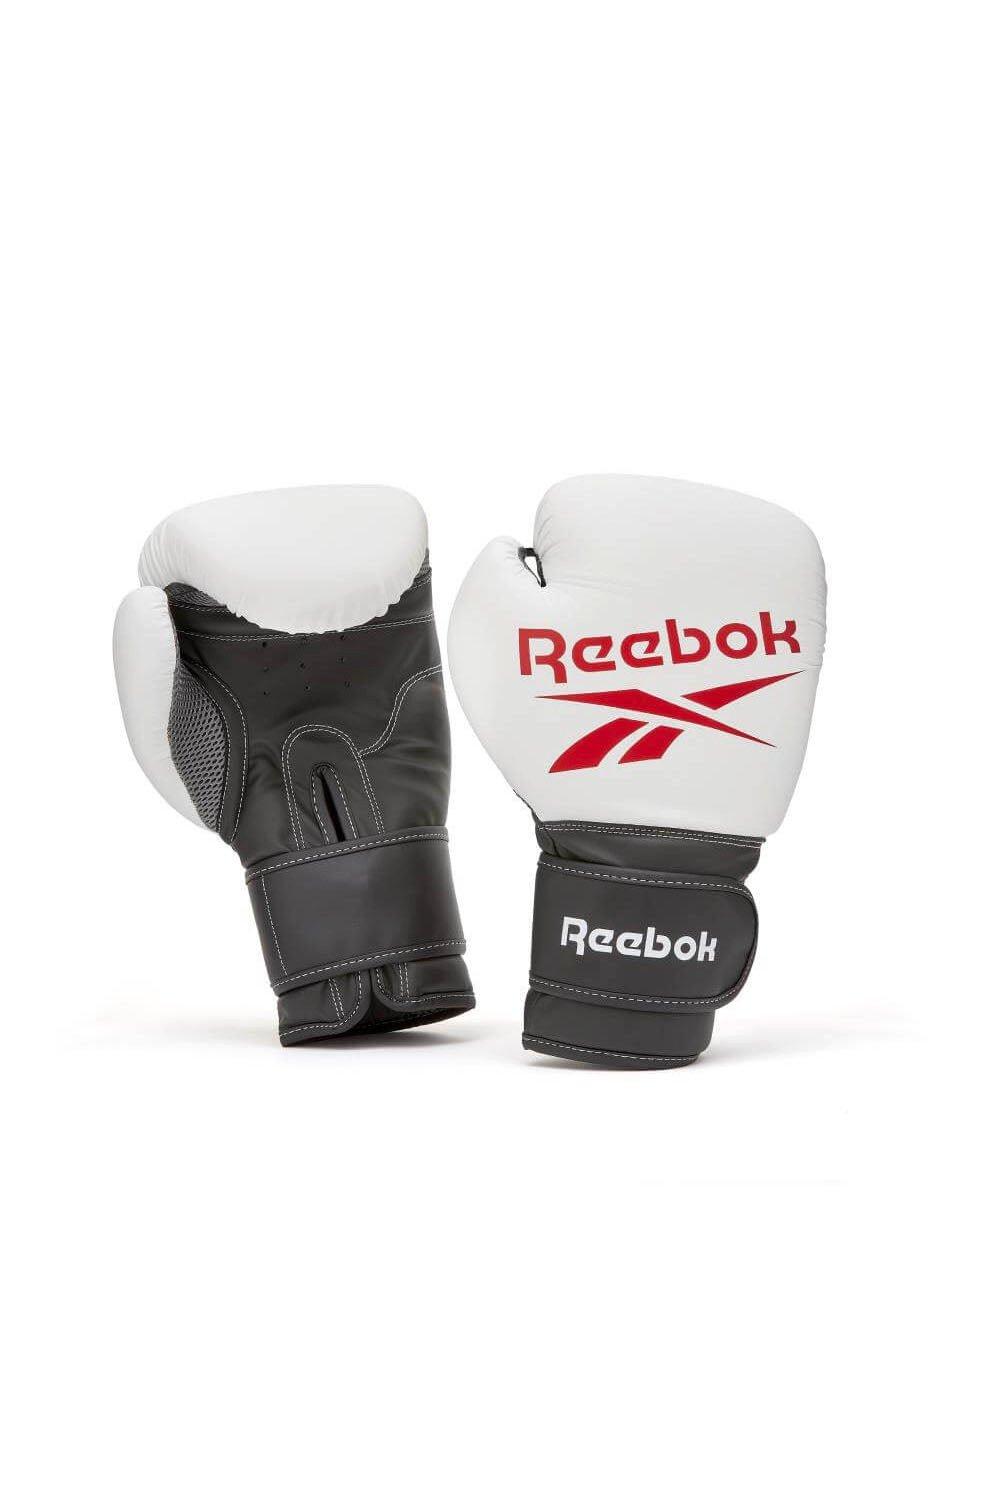 Reebok Boxing Gloves - Red/White|Size: 14oz